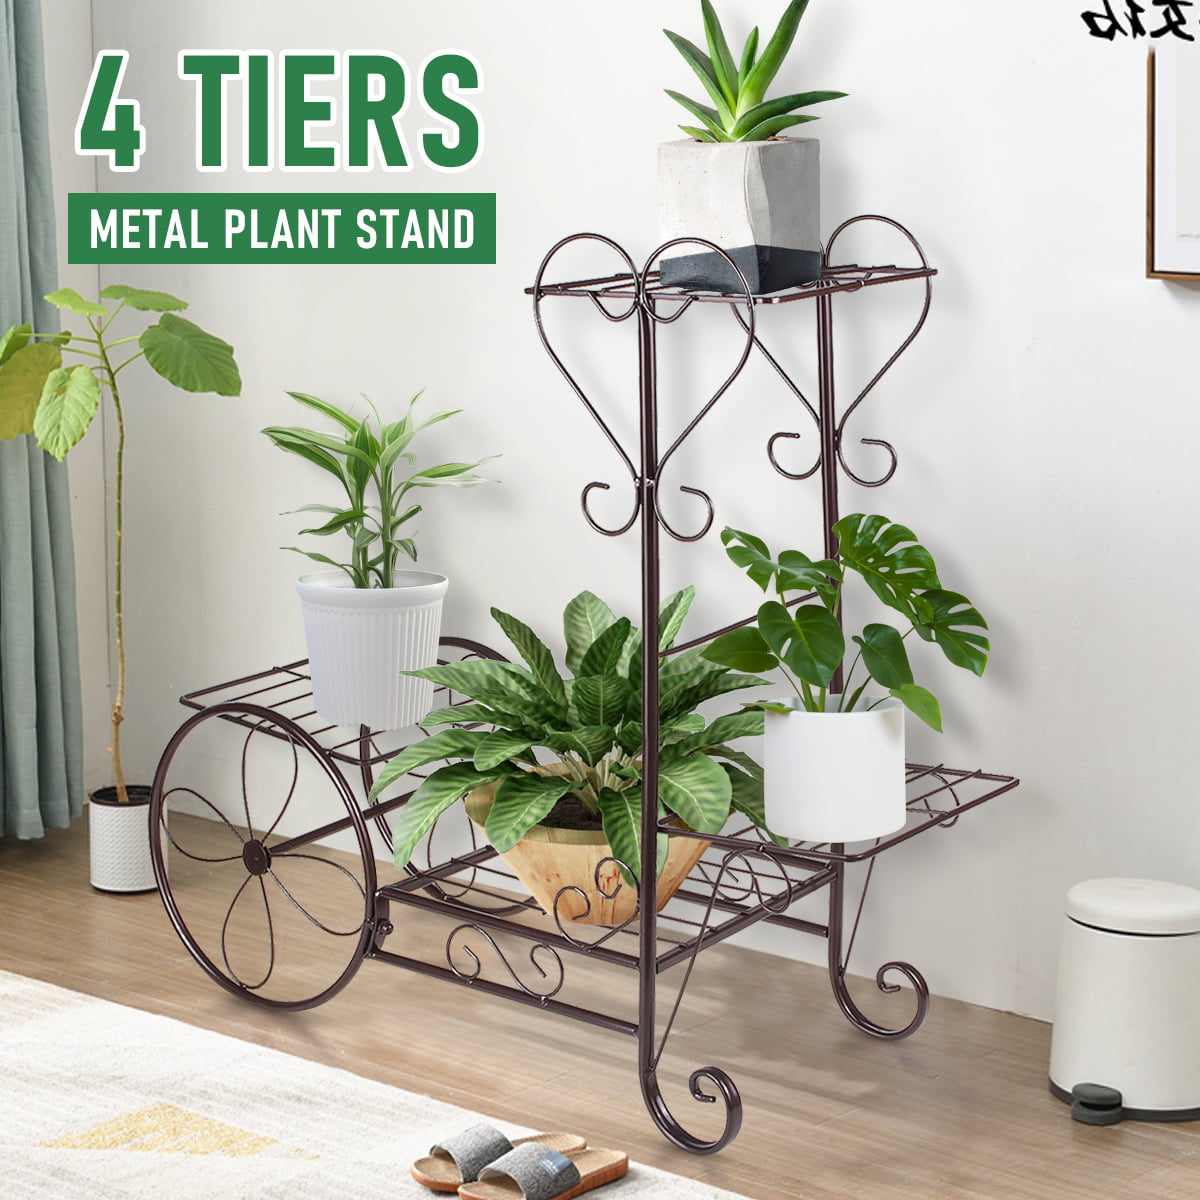 4 Tiers Metal Plant Stand Flower Rack Holder Display Garden Patio Store Decor US 